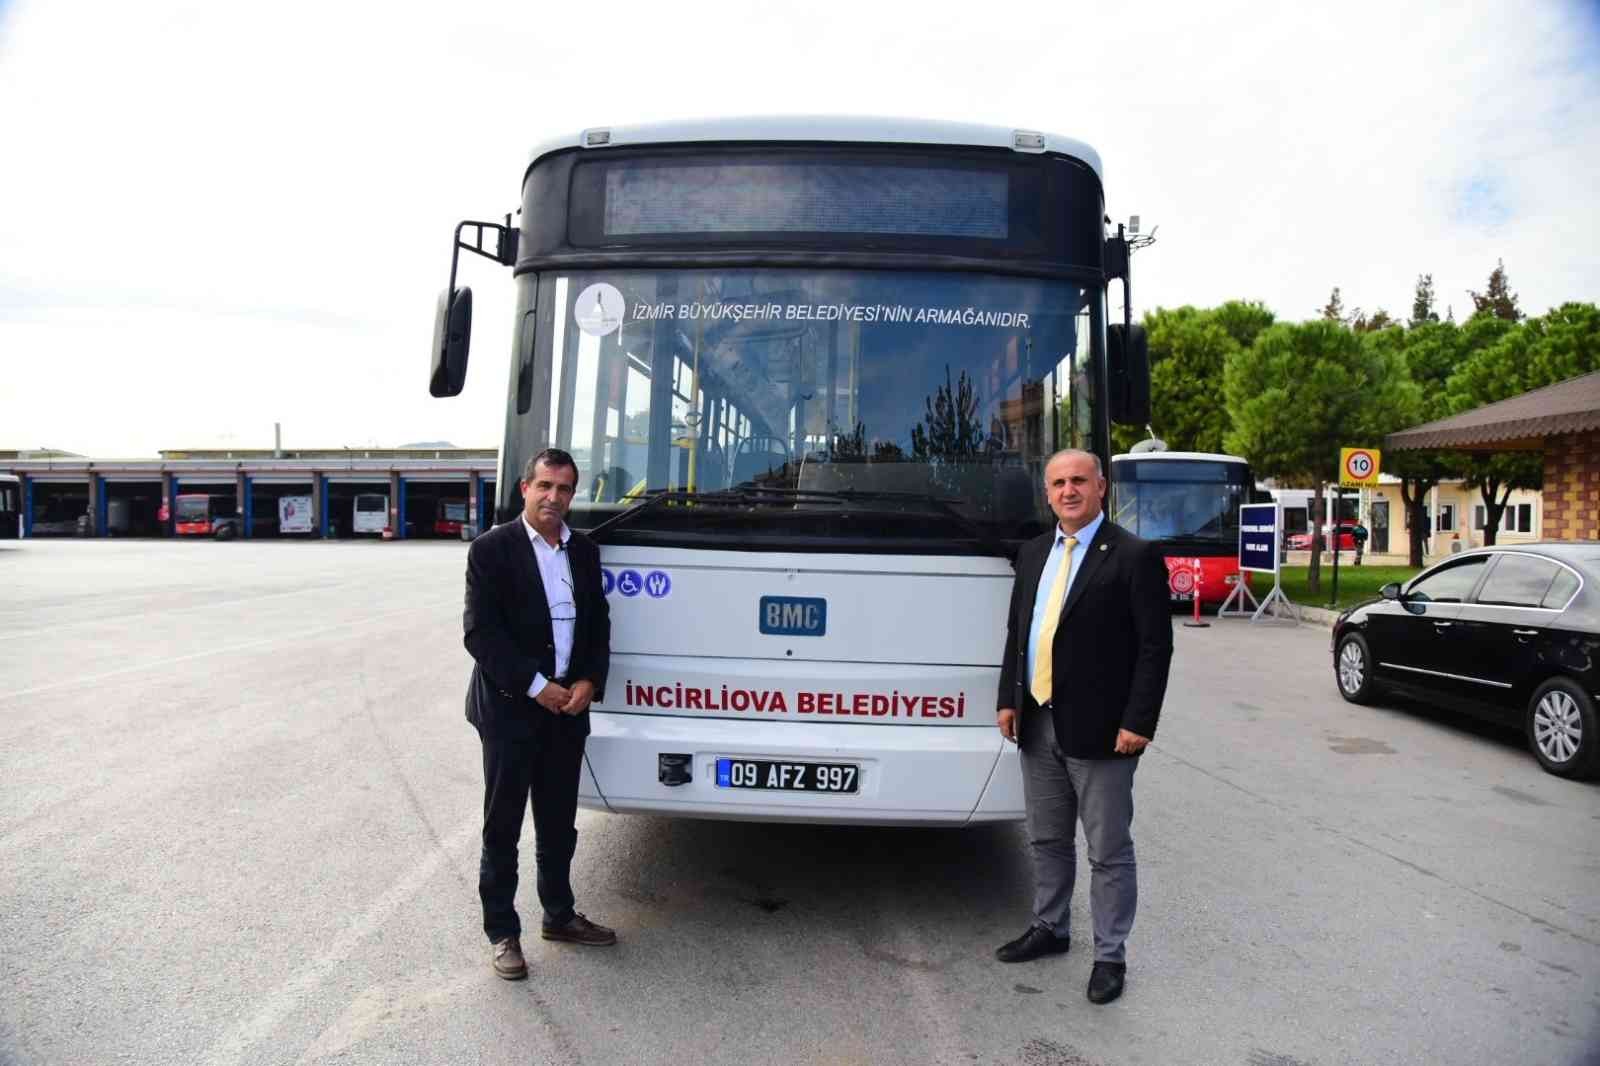 İncirliova’ya İzmir’den hibe otobüs